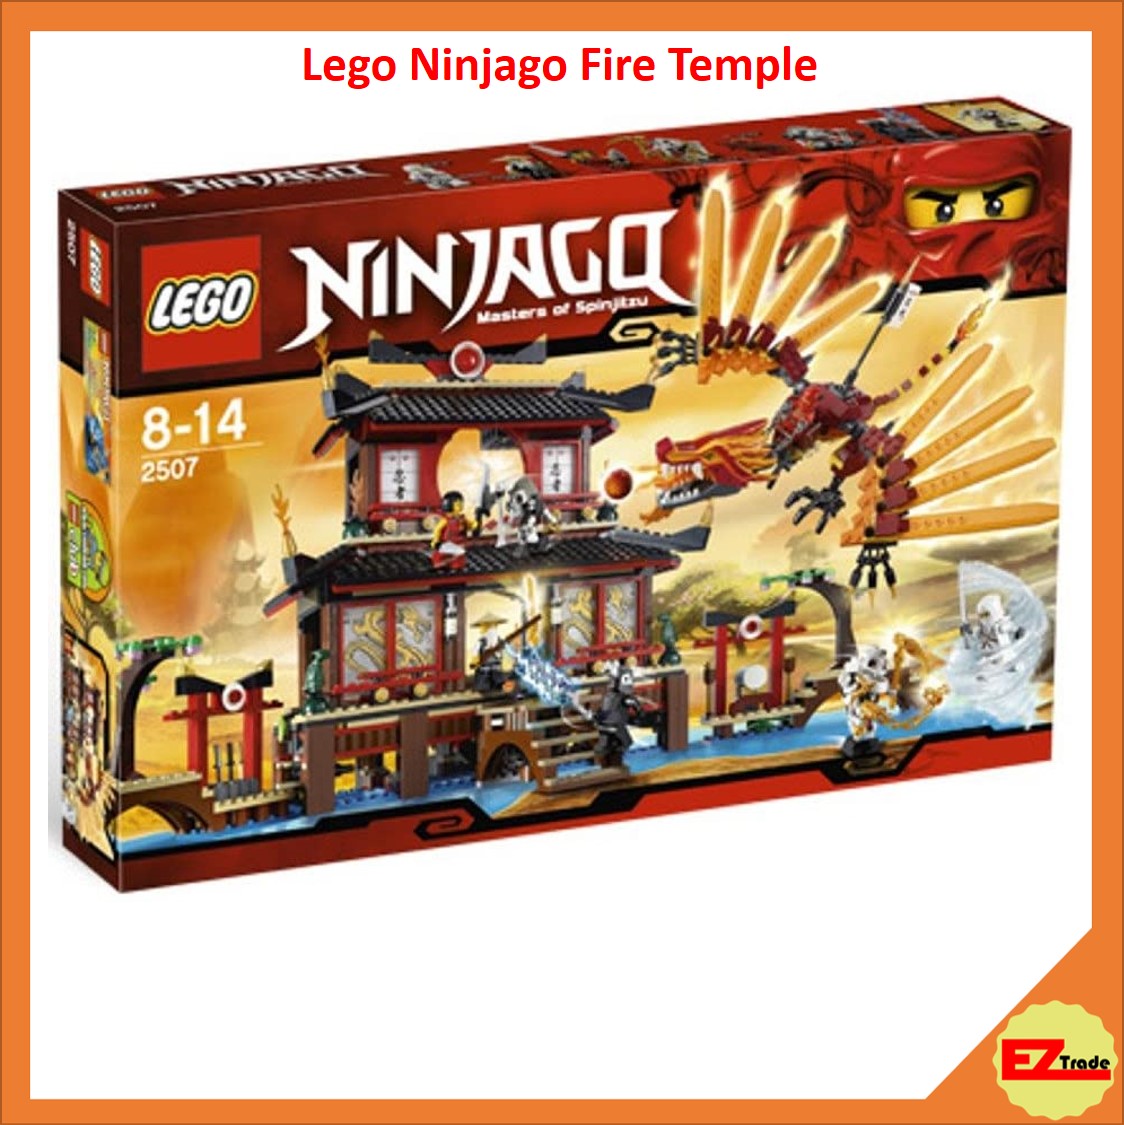 Lego Ninjago Fire Temple 2507 |